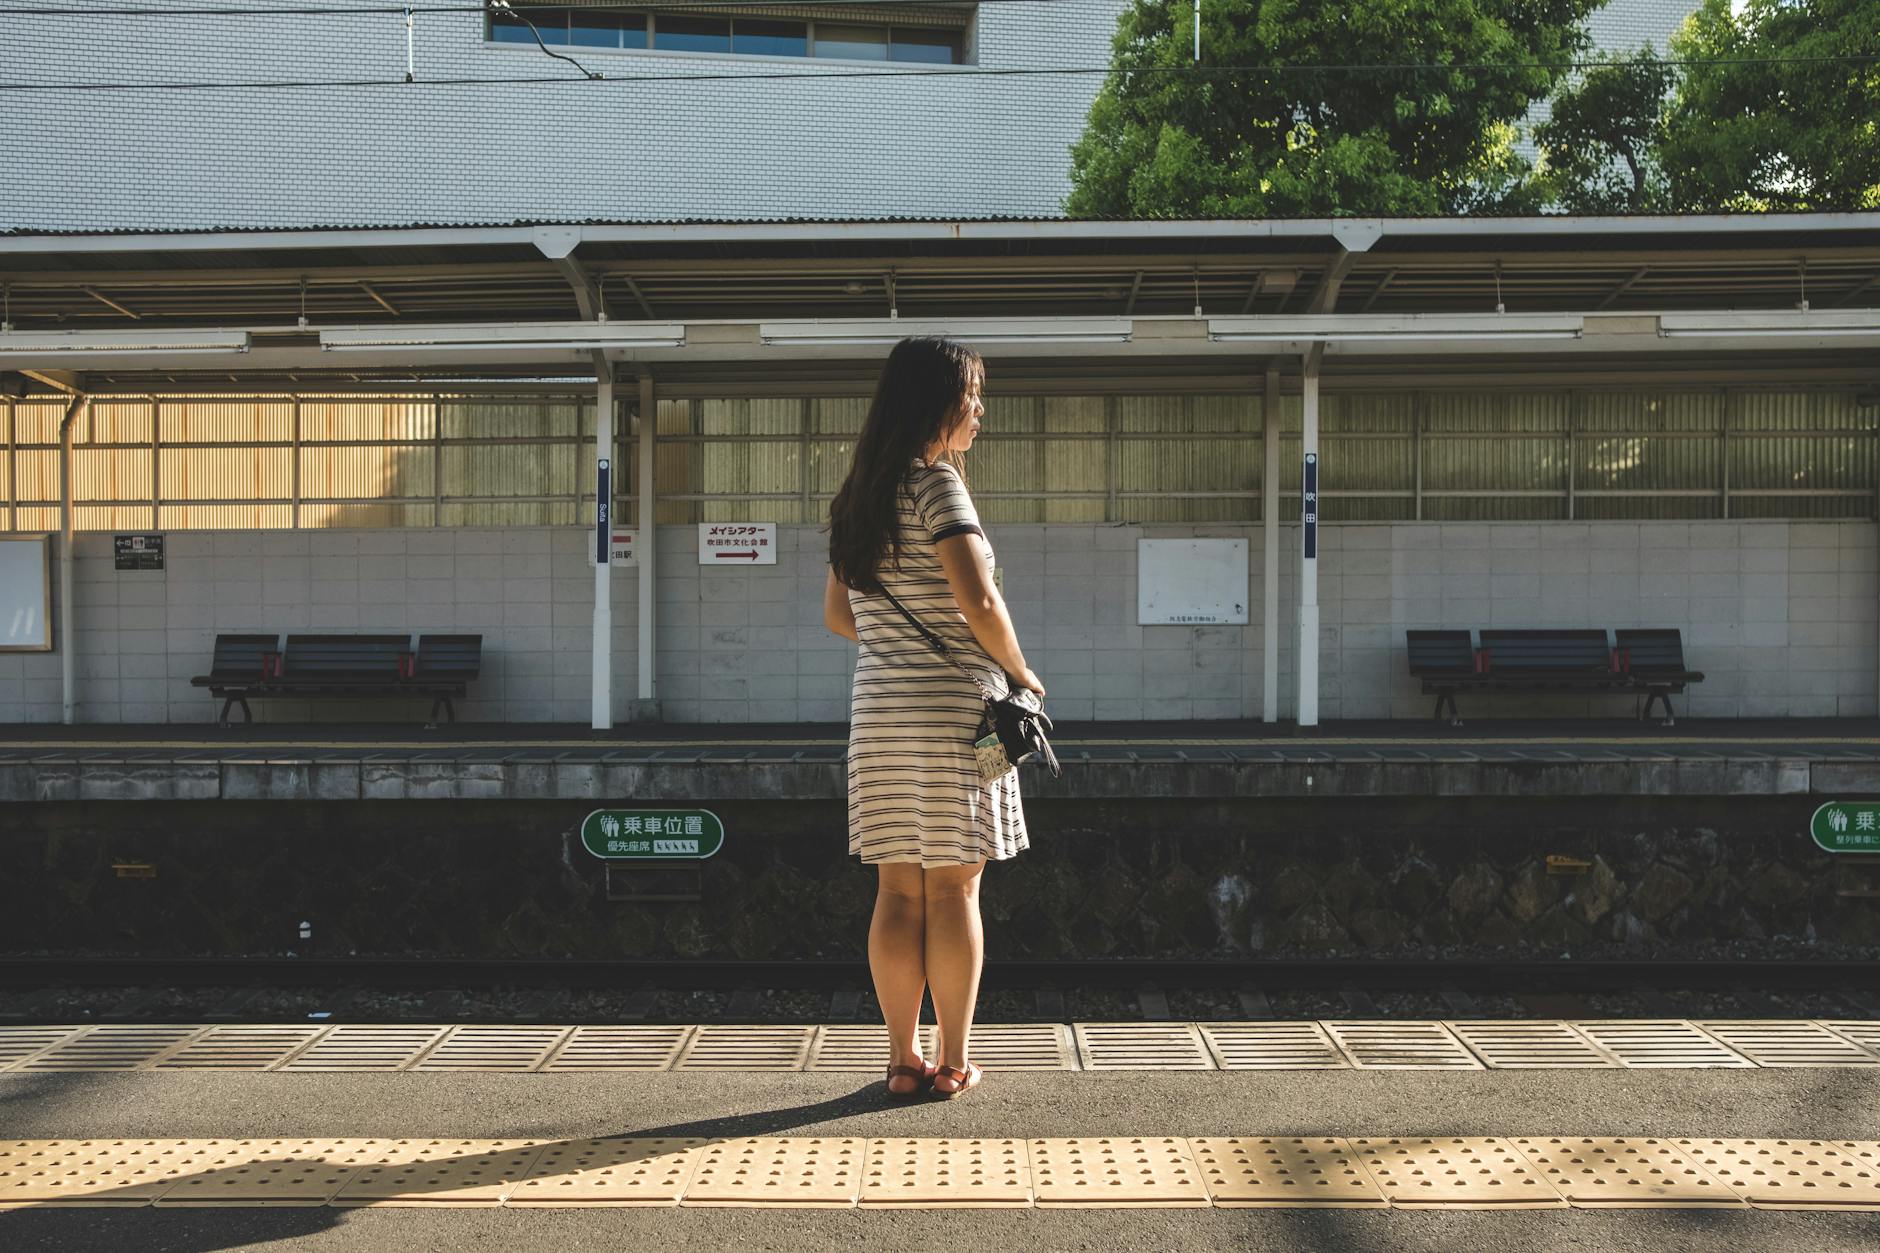 Woman in Striped Dress Standing on Railway Platform